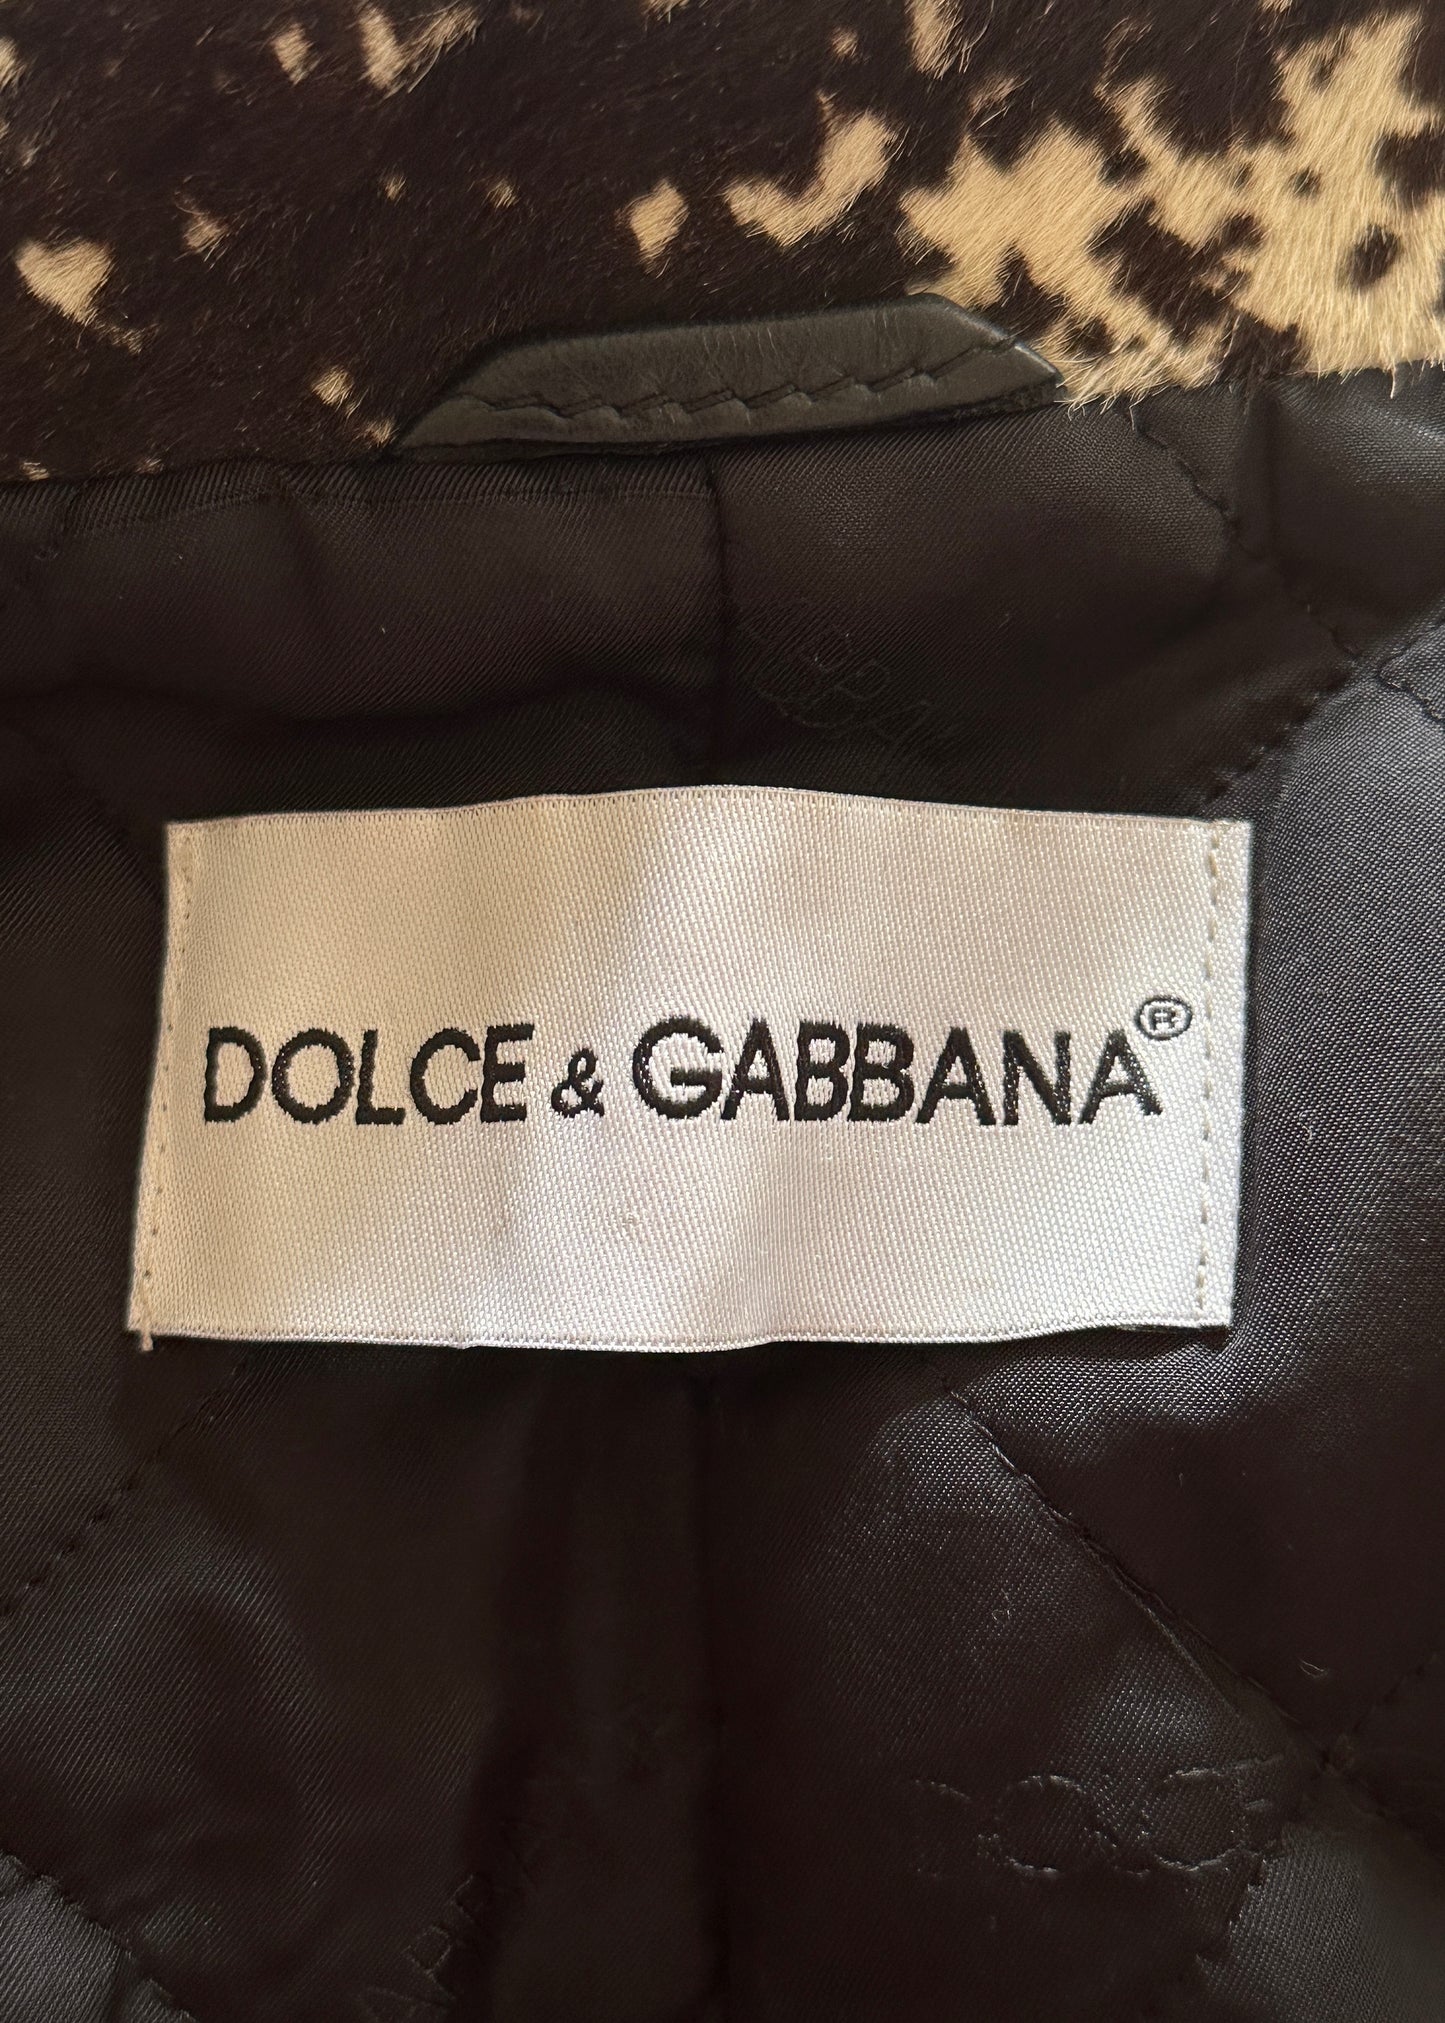 Dolce & Gabbana Fall 2002 Pony Hair Leather Mottled Jacket